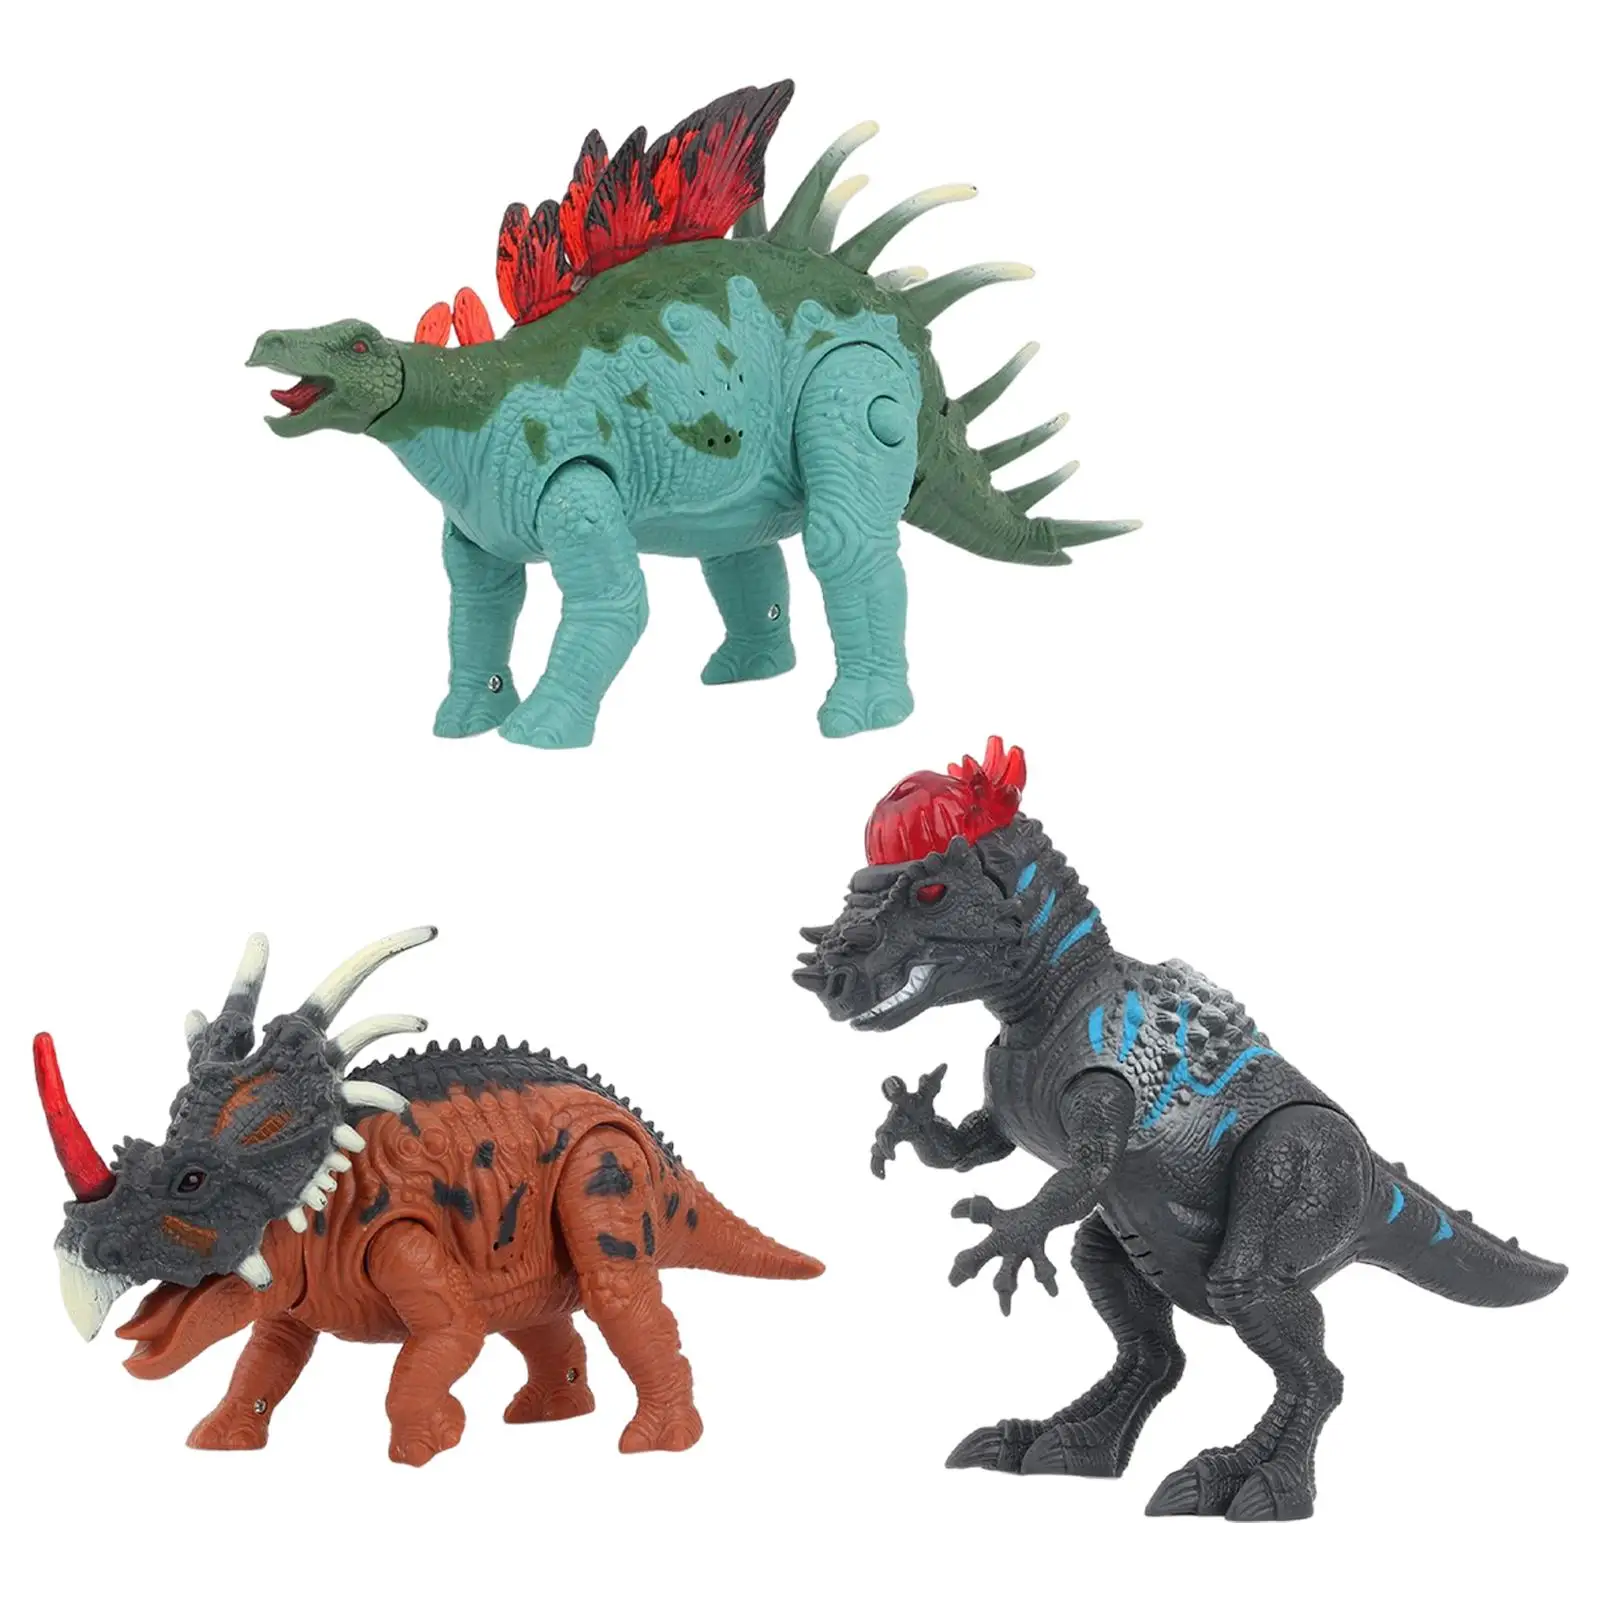 Simulation Dinosaur Toy for Kids Dinosaur Model Mechanical for Holiday Kids